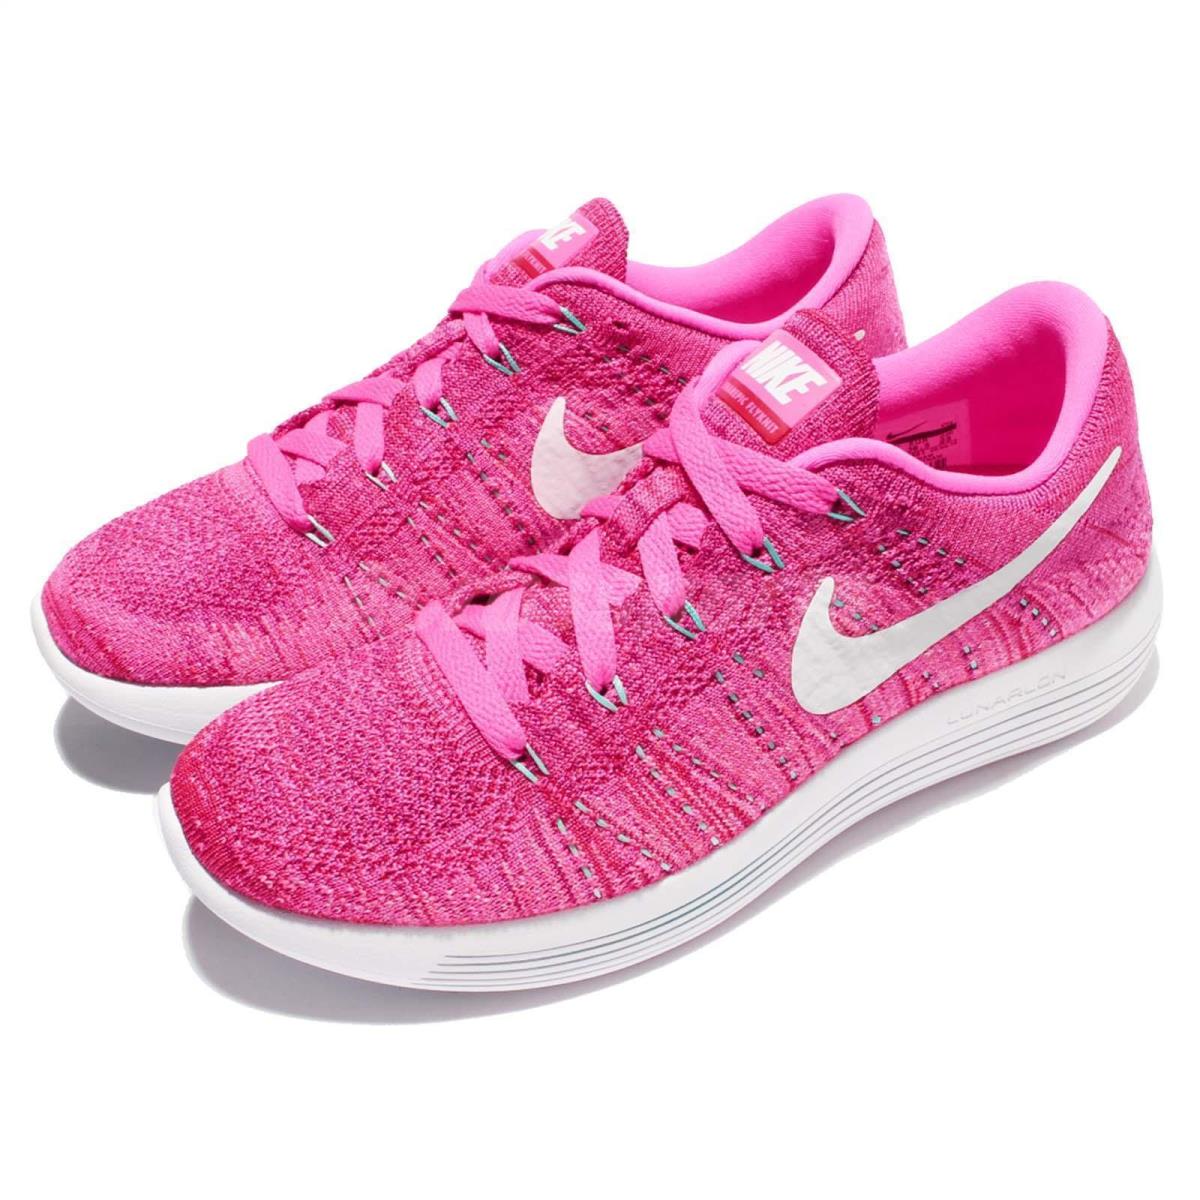 Womens Nike Lunarepic Low Flyknit 843765 601 Runningtraining Shoes Sneakers S7